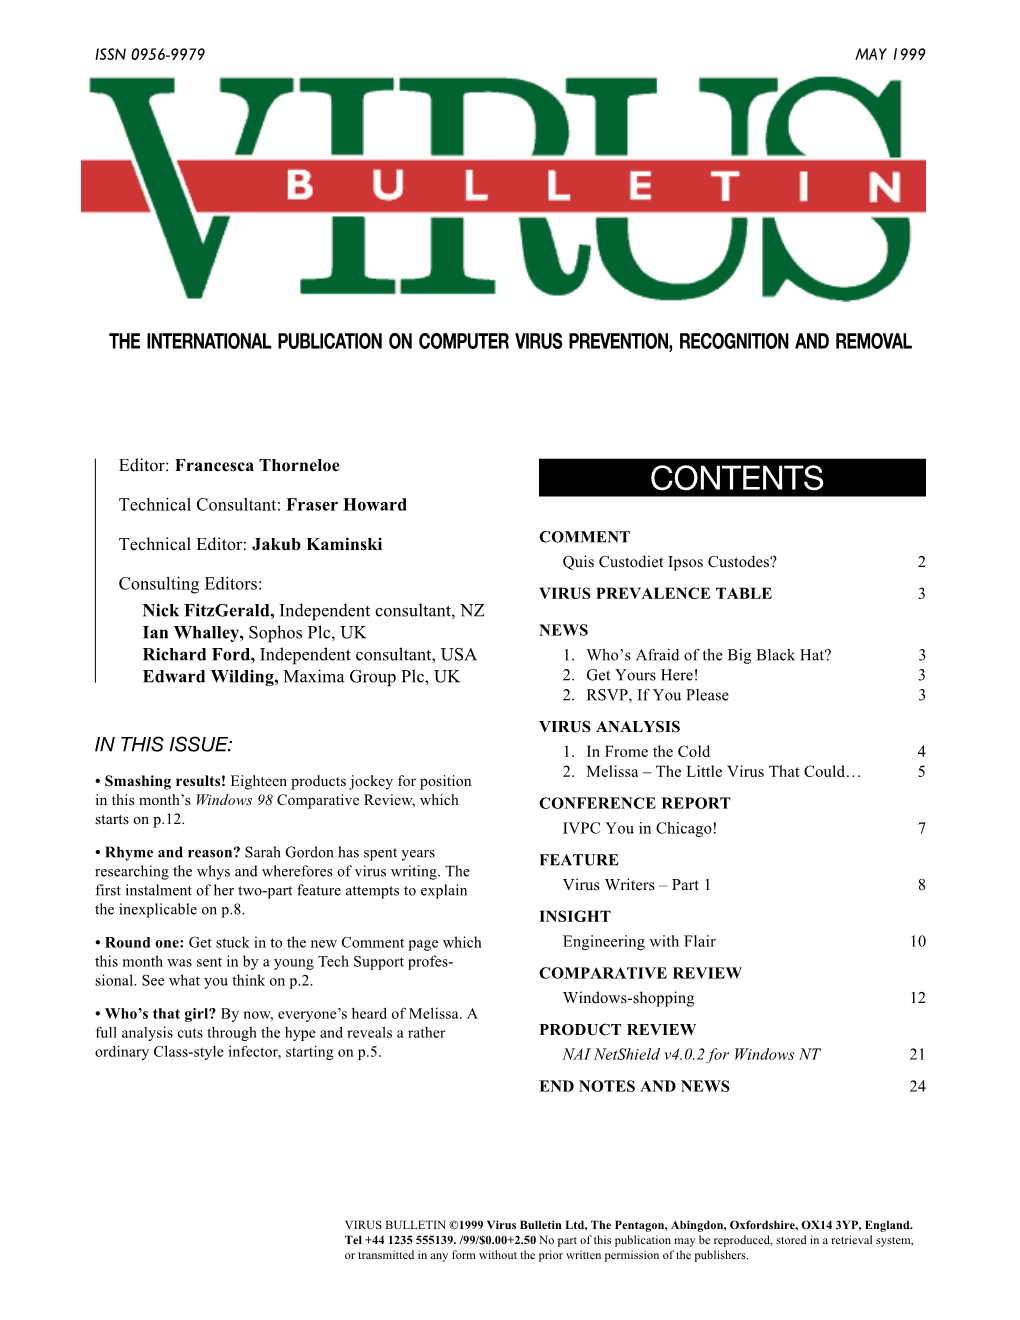 Virus Bulletin, May 1999